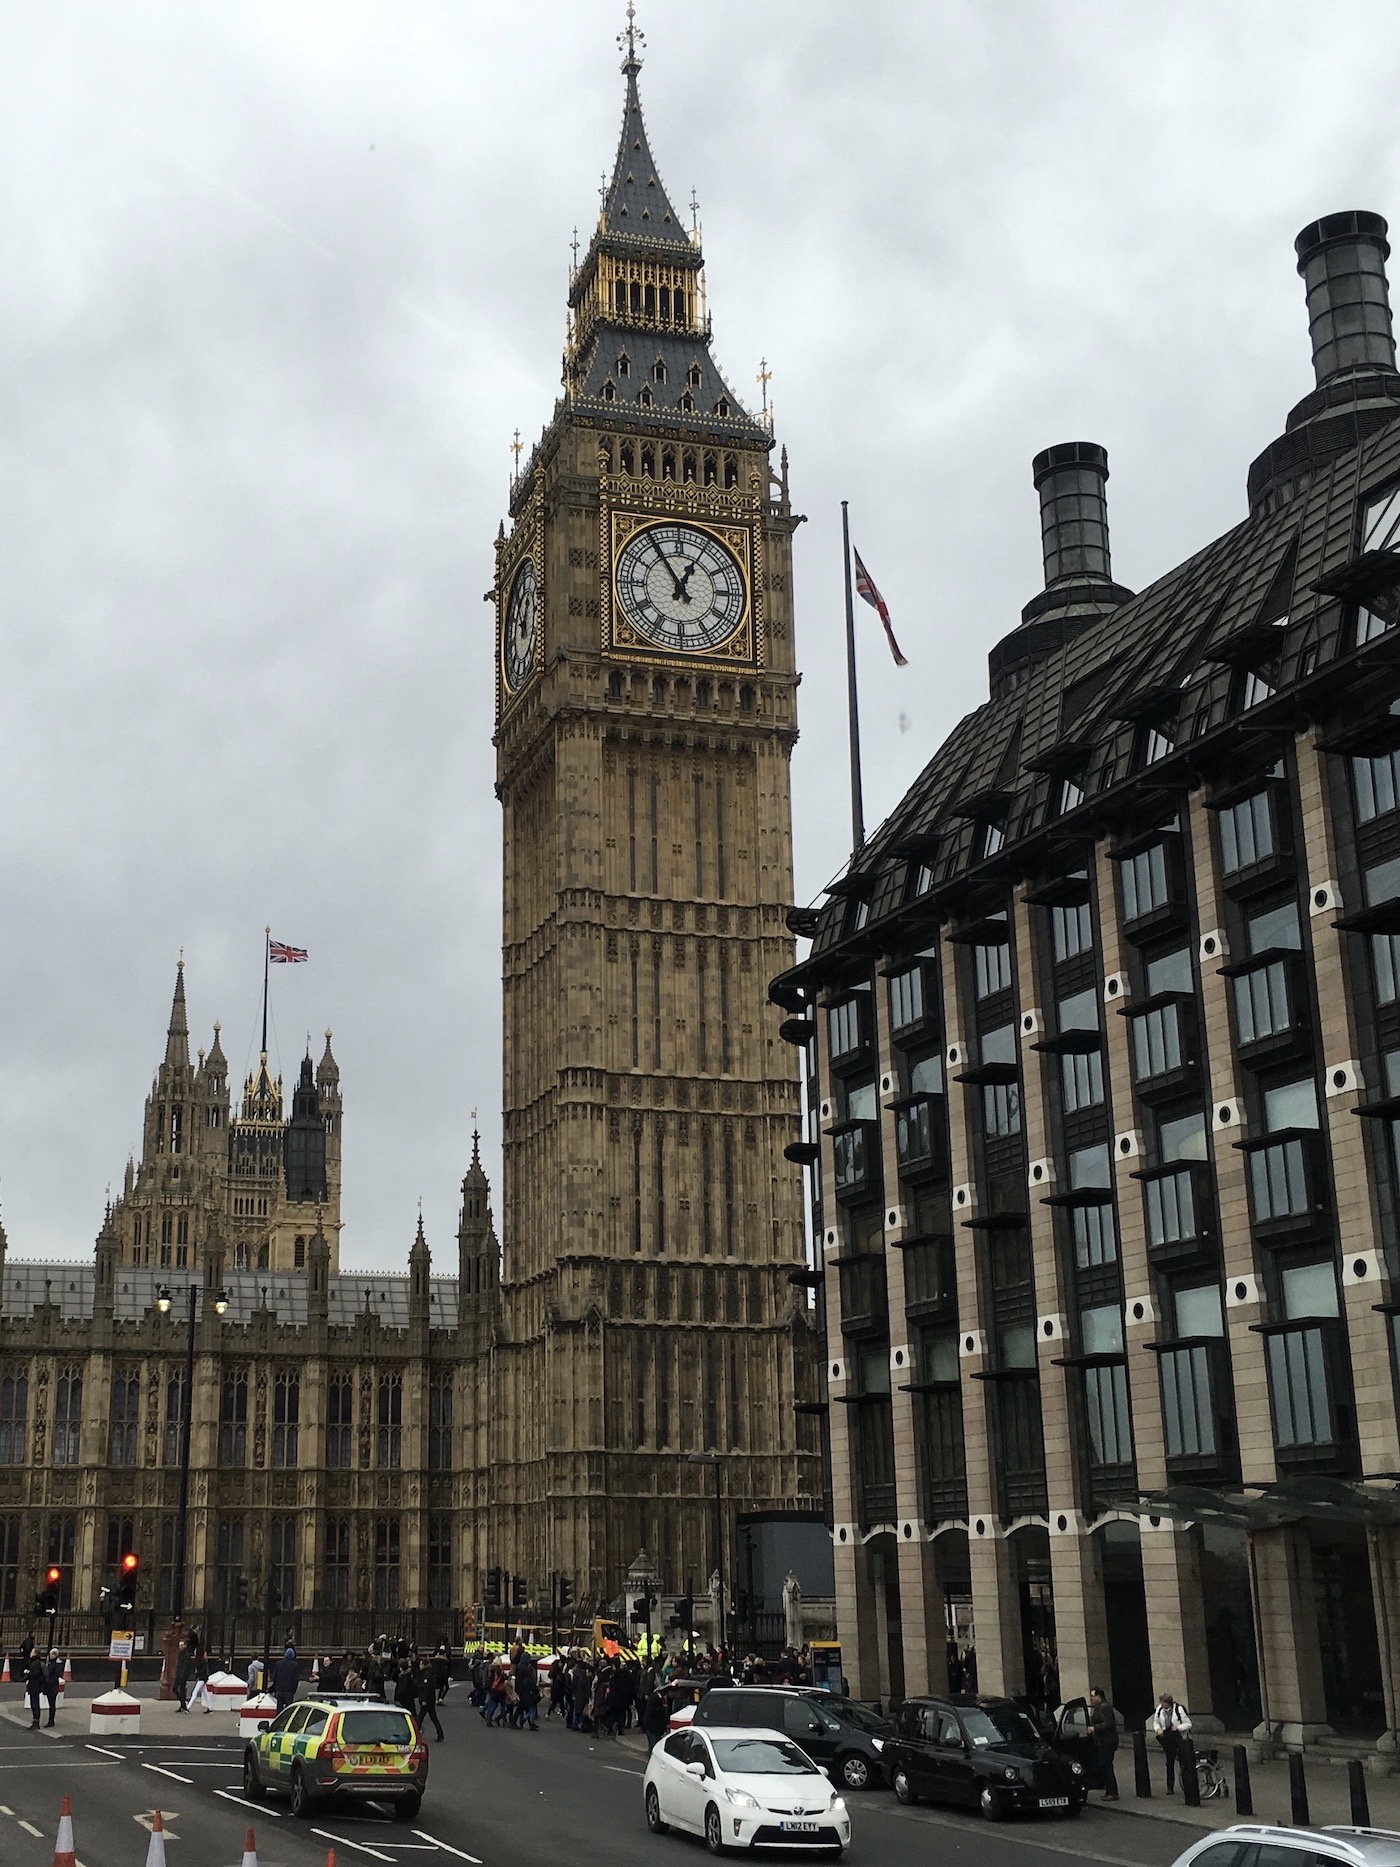 big ben clock in london 2015